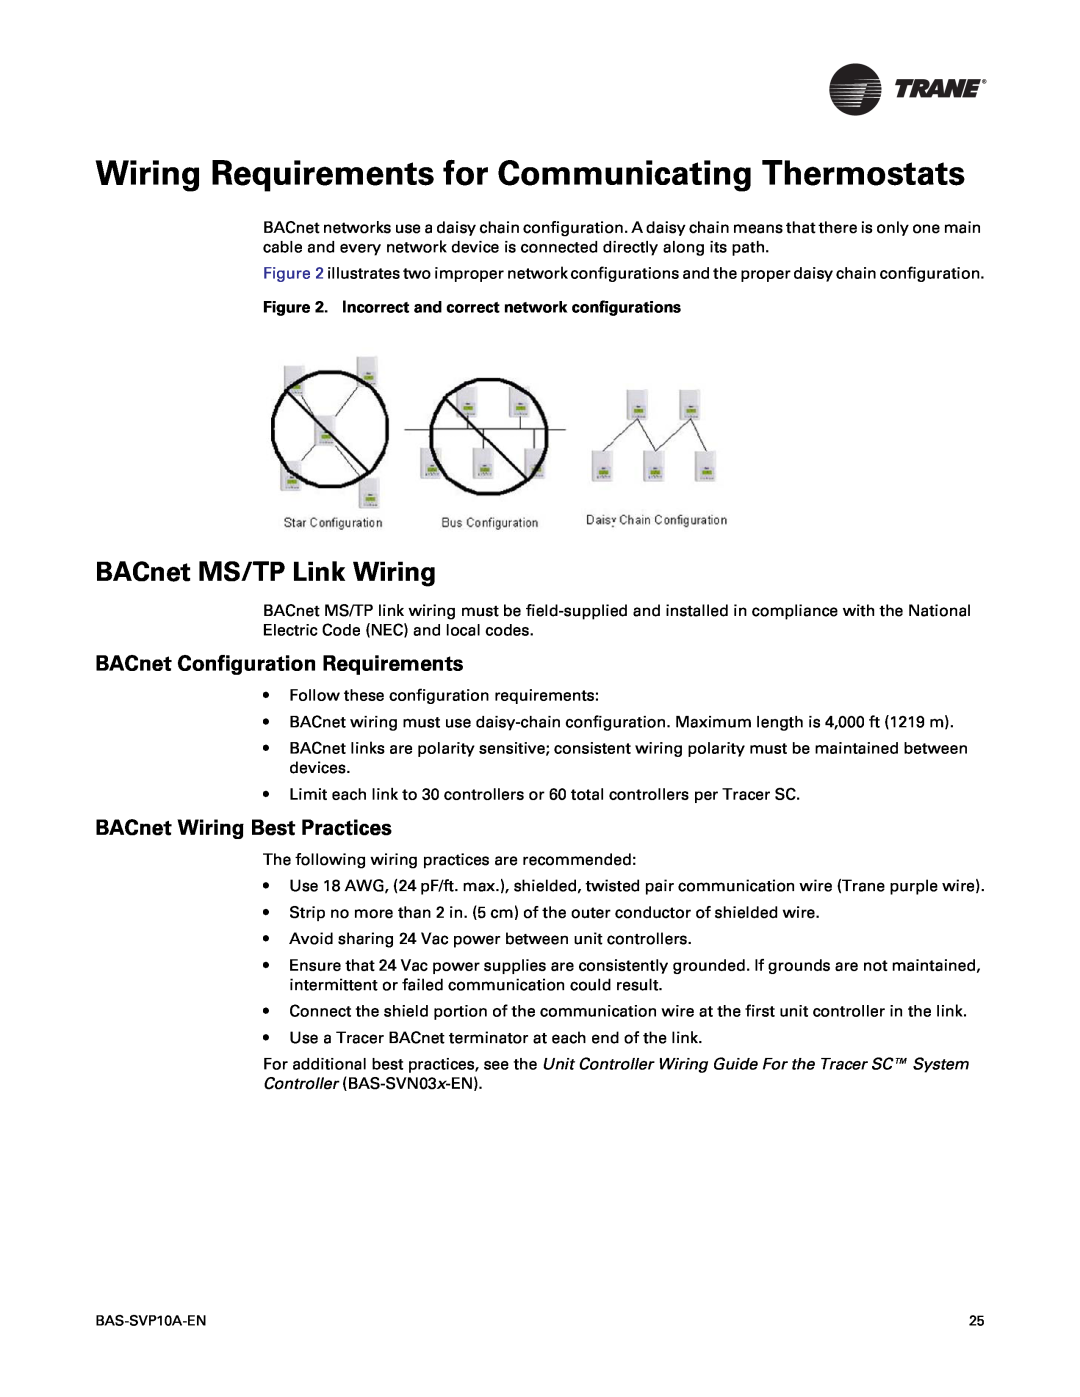 Trane Trane Communicating Thermostats (BACnet) Wiring Requirements for Communicating Thermostats, BACnet MS/TP Link Wiring 